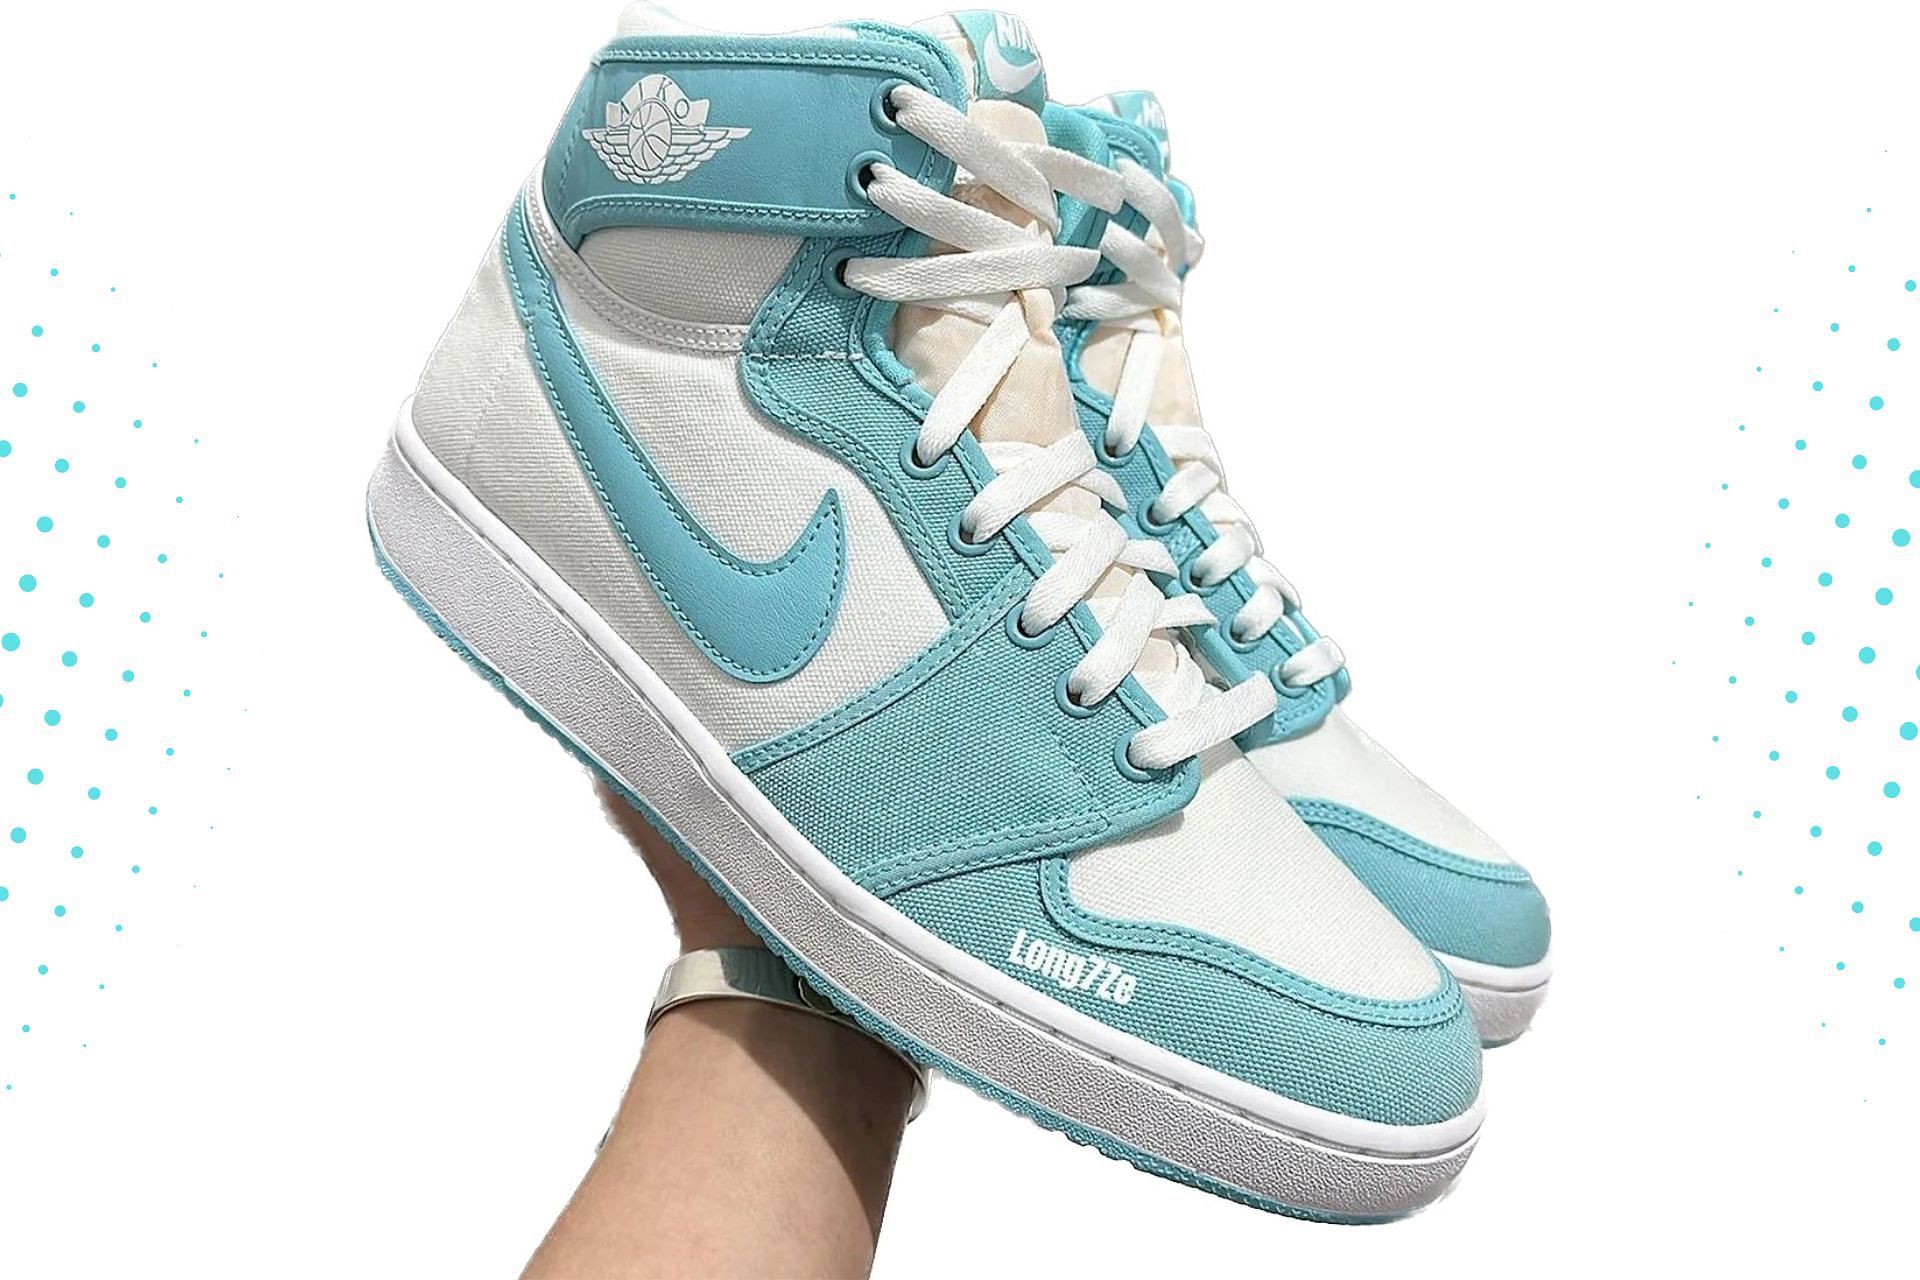 Air Jordan 1 KO Tiffany/White shoes (Image via Instagram/@long7Ze)